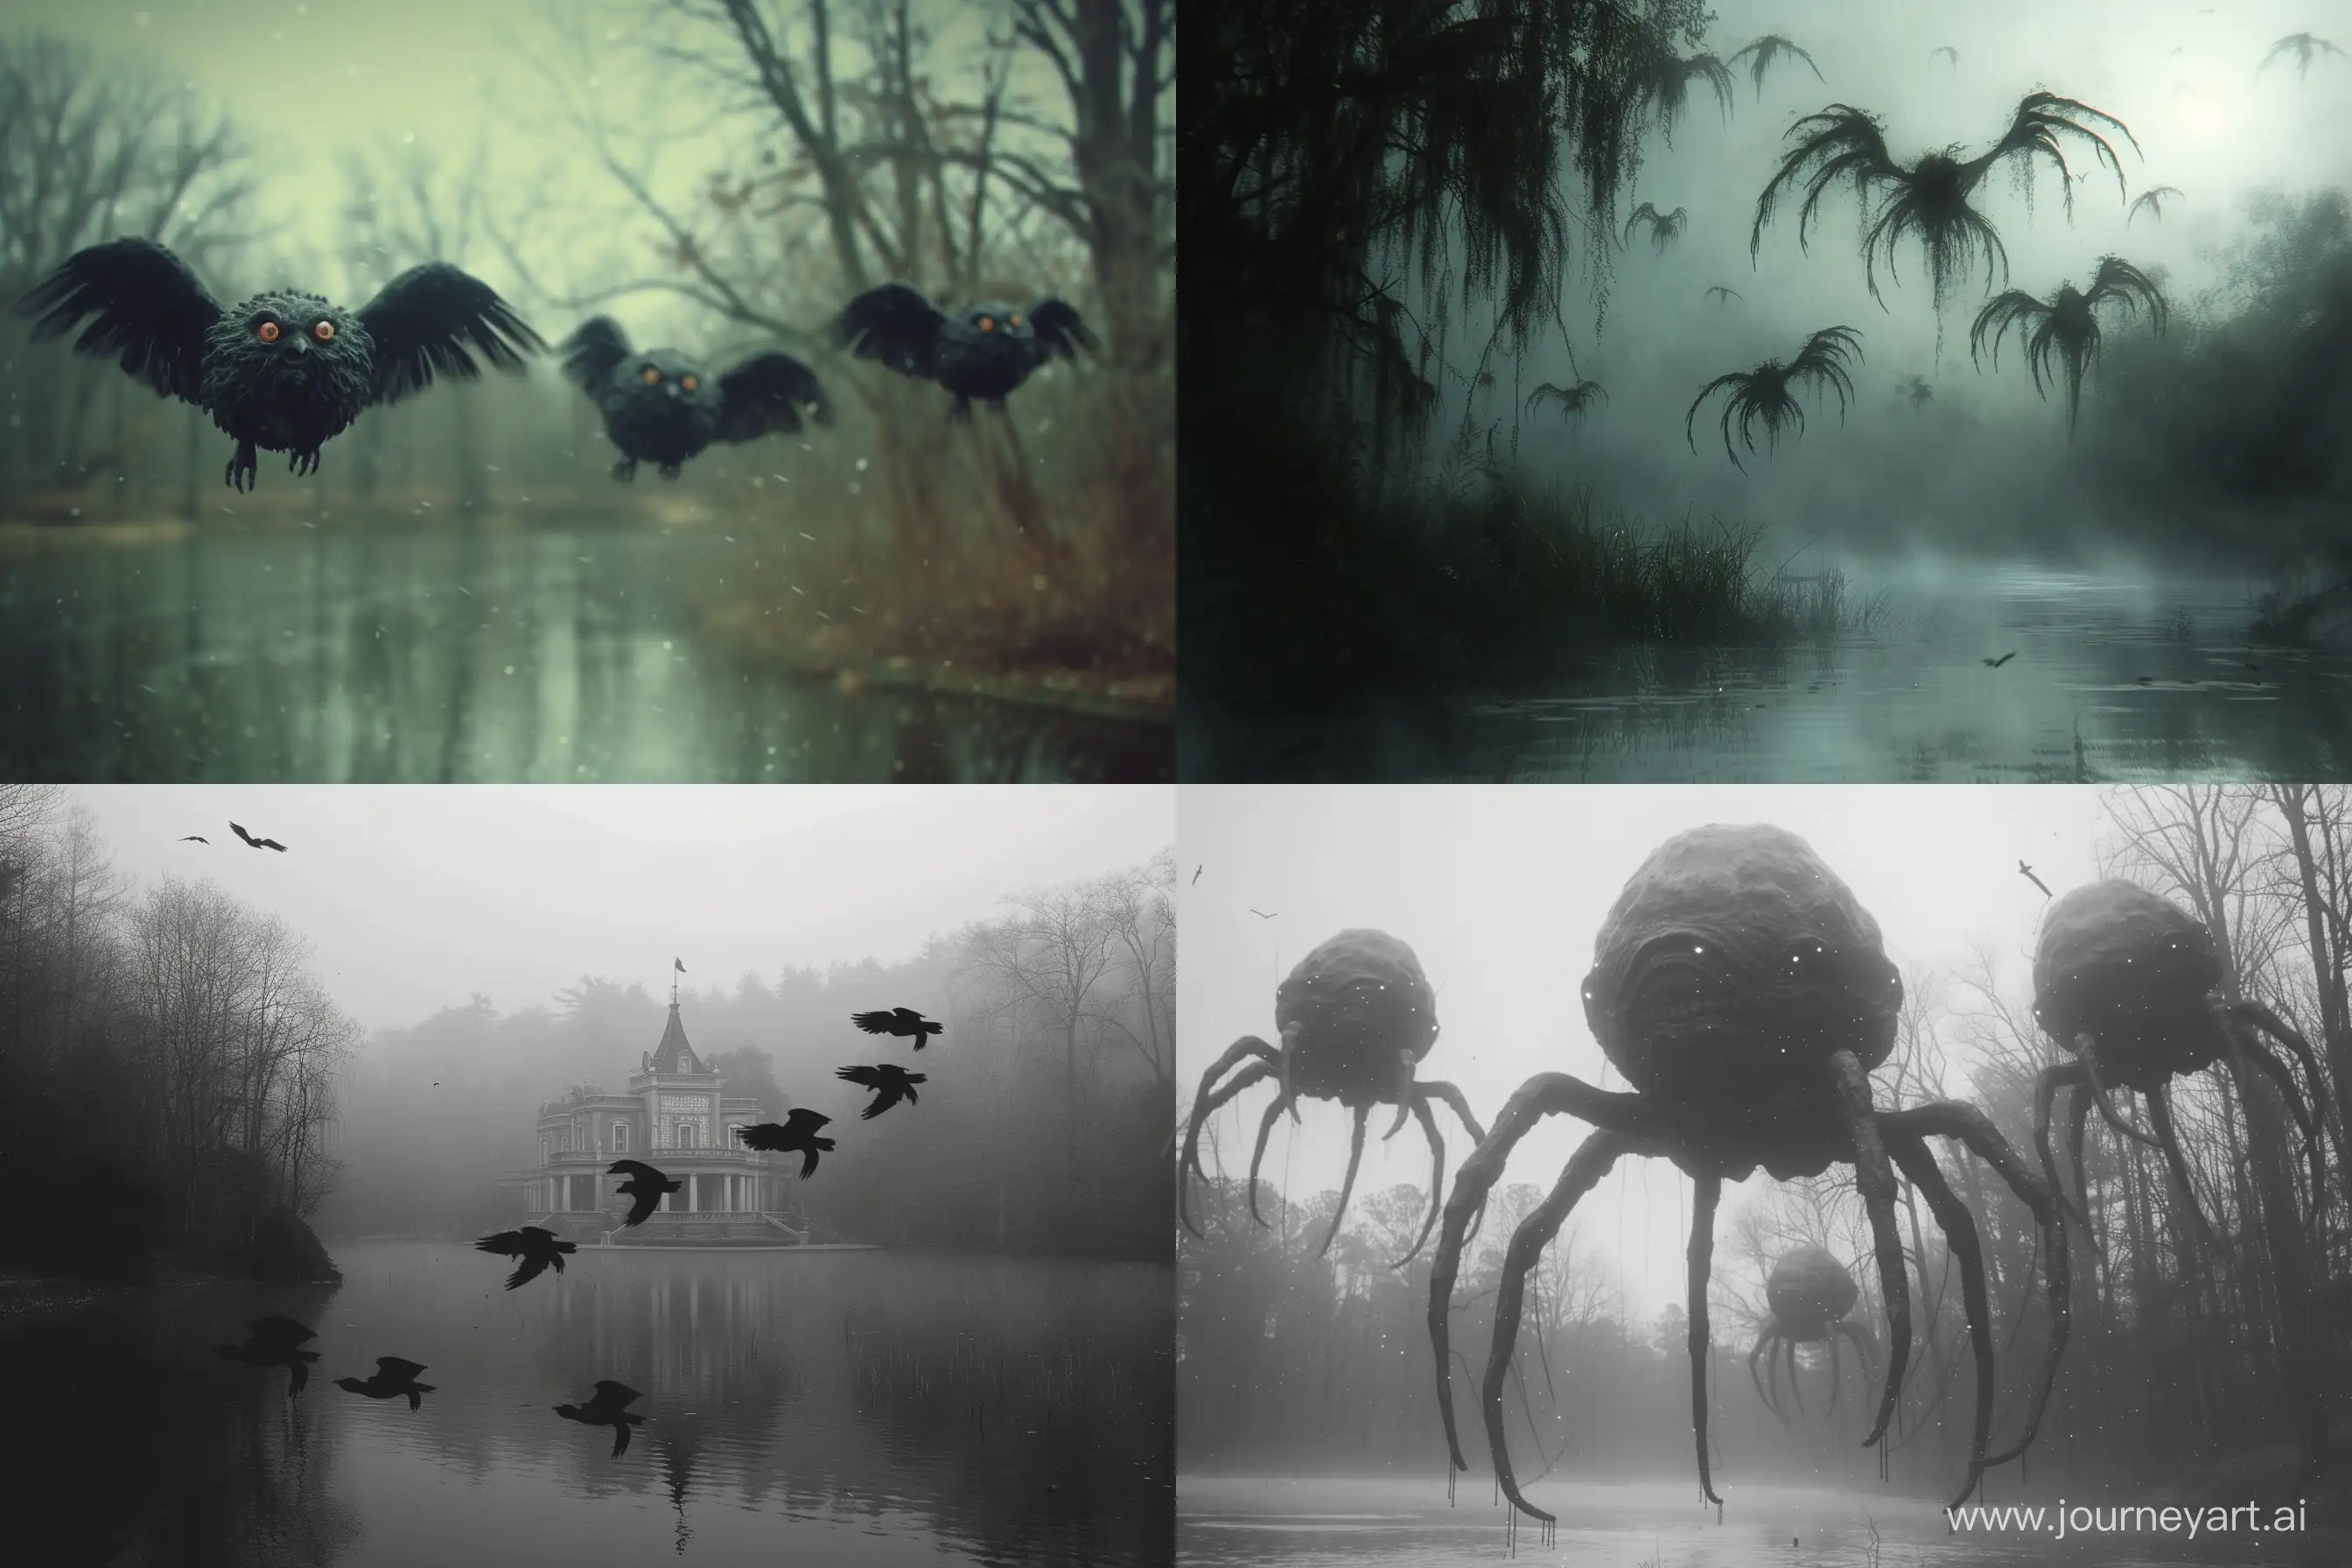 Eerie-Black-Tylenol-Creatures-Gliding-over-Dark-Waters-in-Tim-Burton-Style